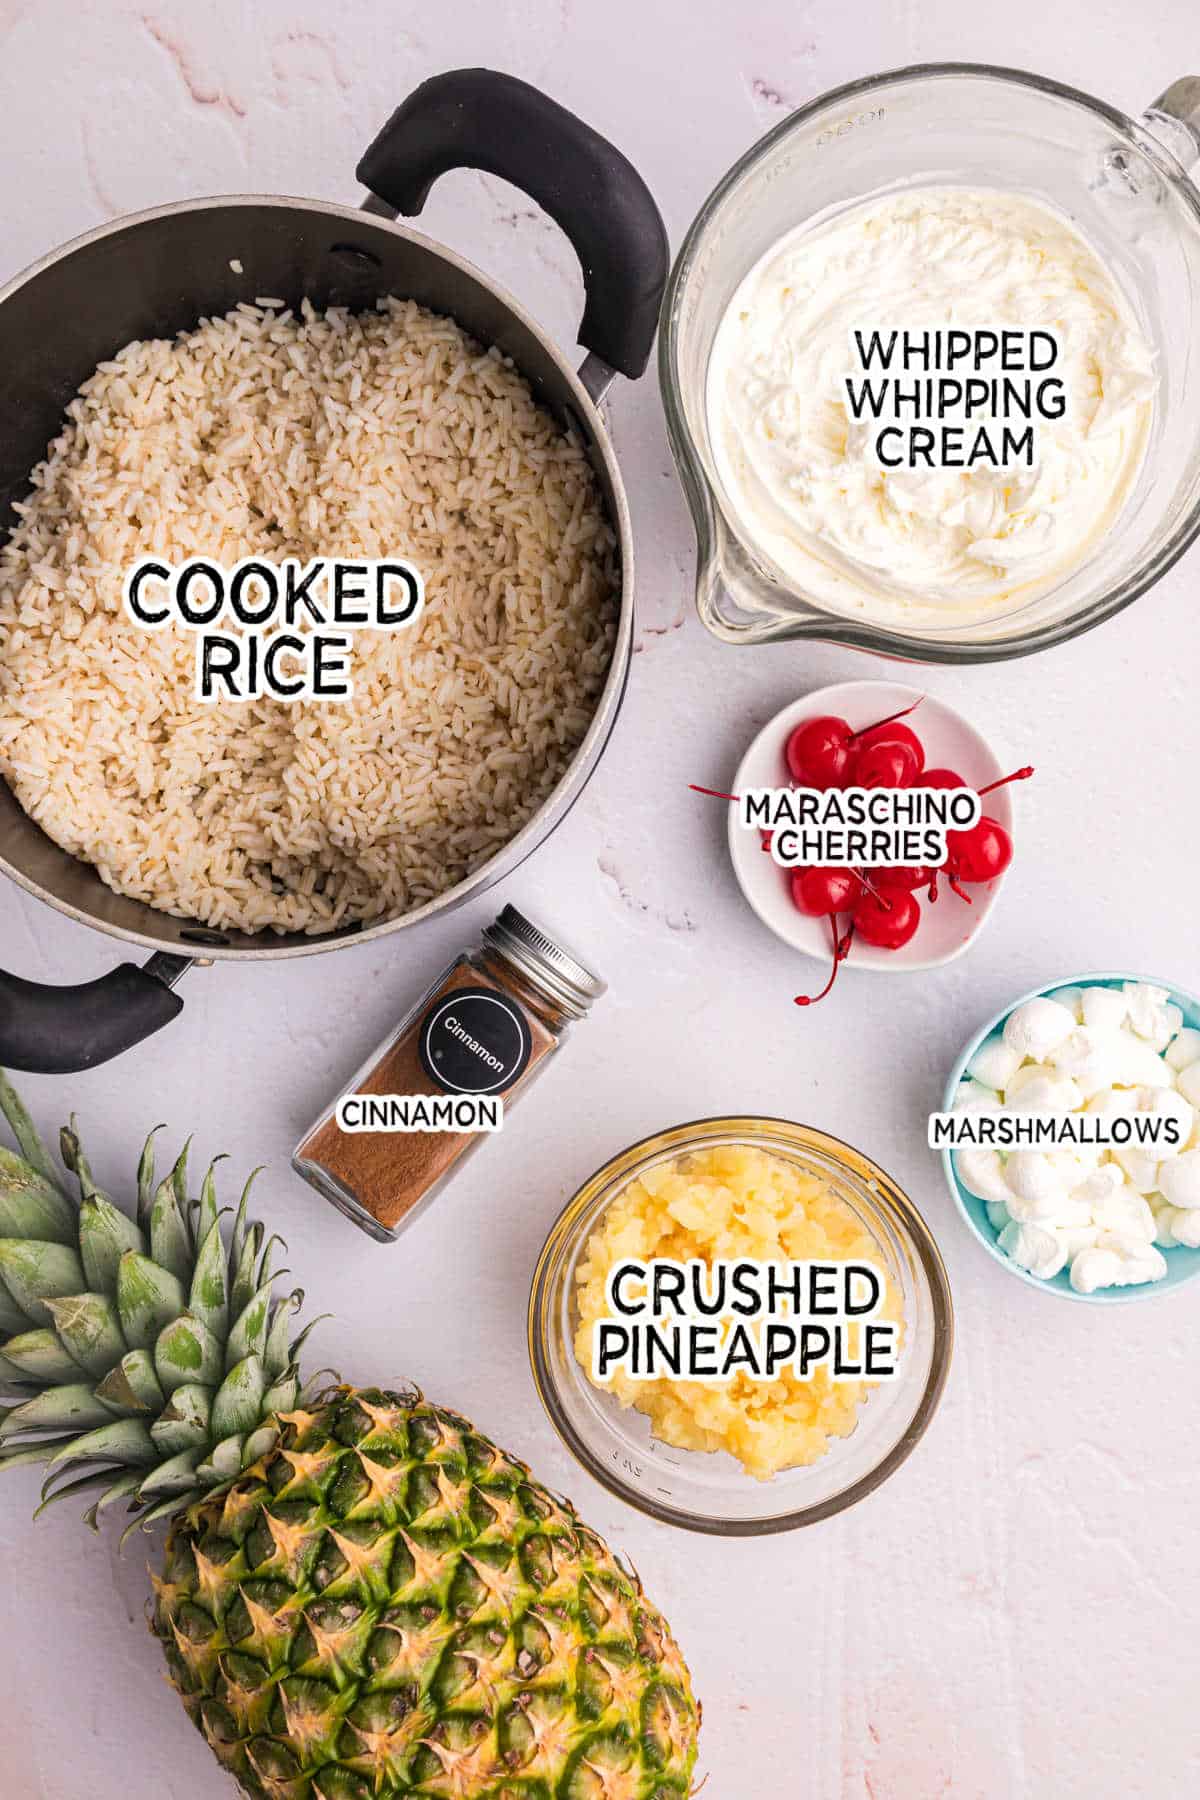 Pineapple rice pudding ingredients.